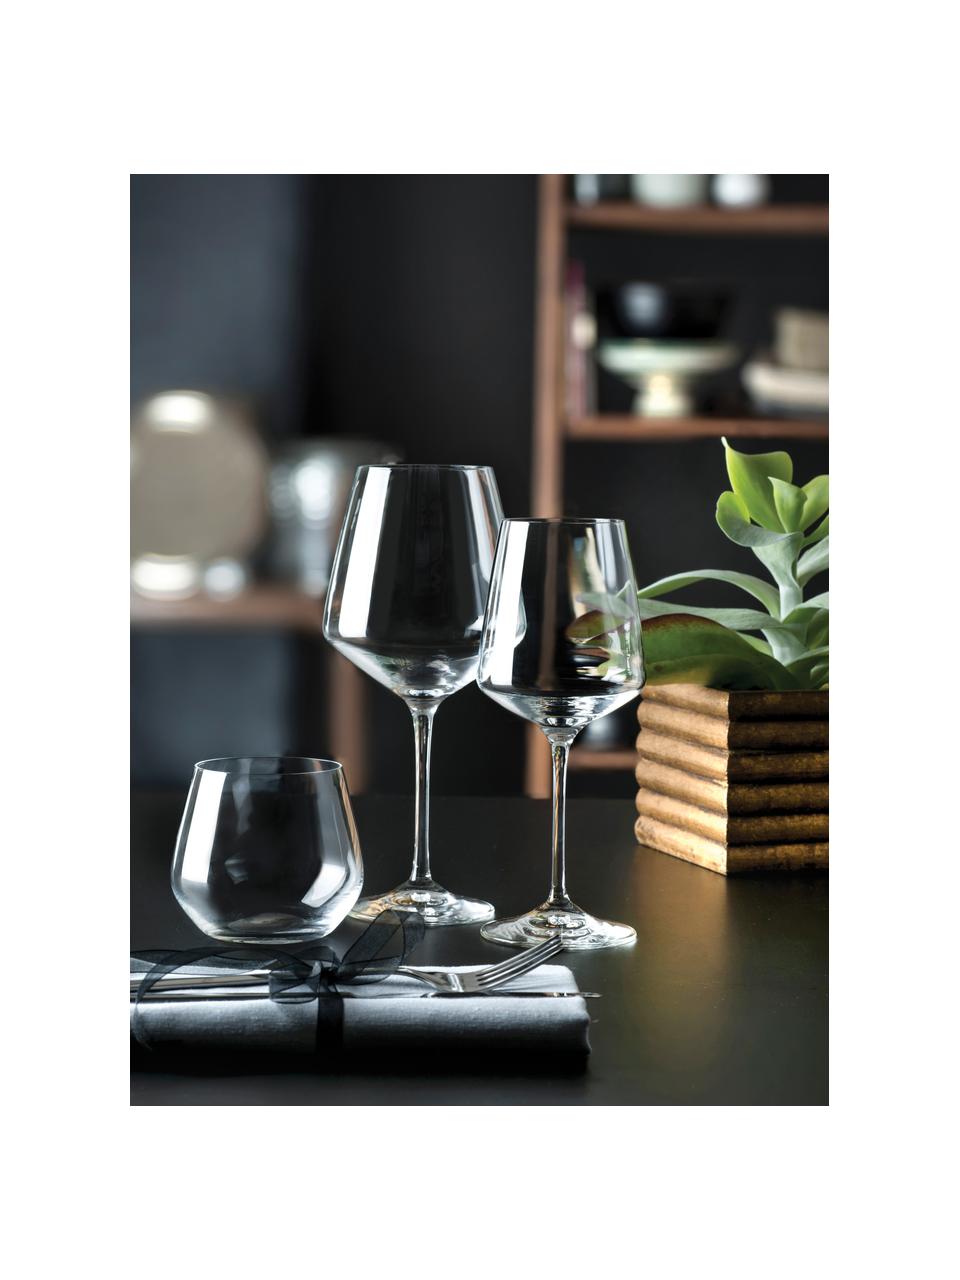 Vasos de vino de cristal Aria, 6 uds., Cristal, Transparente, Ø 11 x Al 9 cm, 550 ml